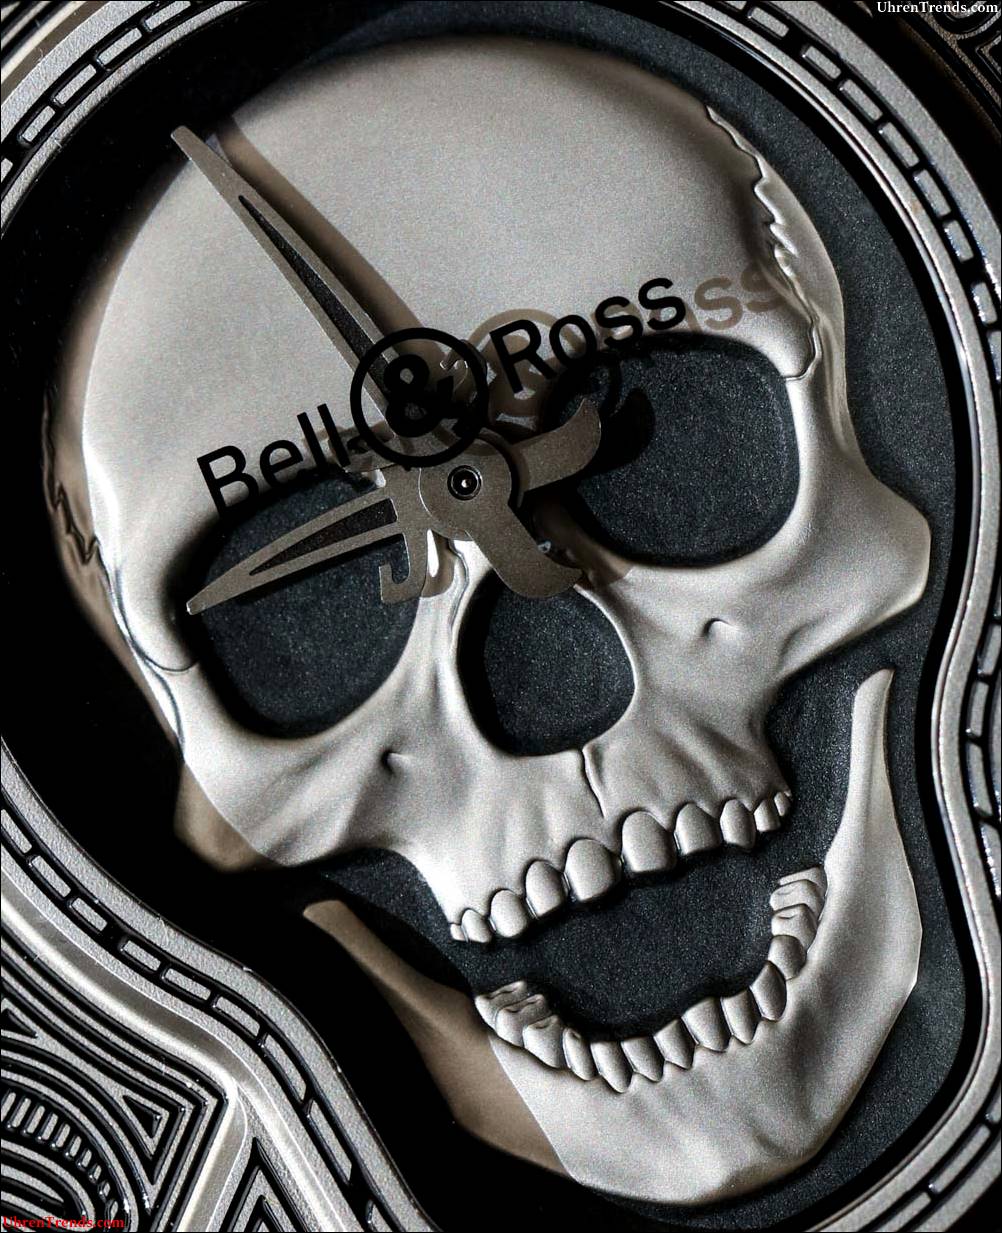 Bell & Ross BR01 Brennende Totenkopf "Tattoo" Uhr Hands-On  